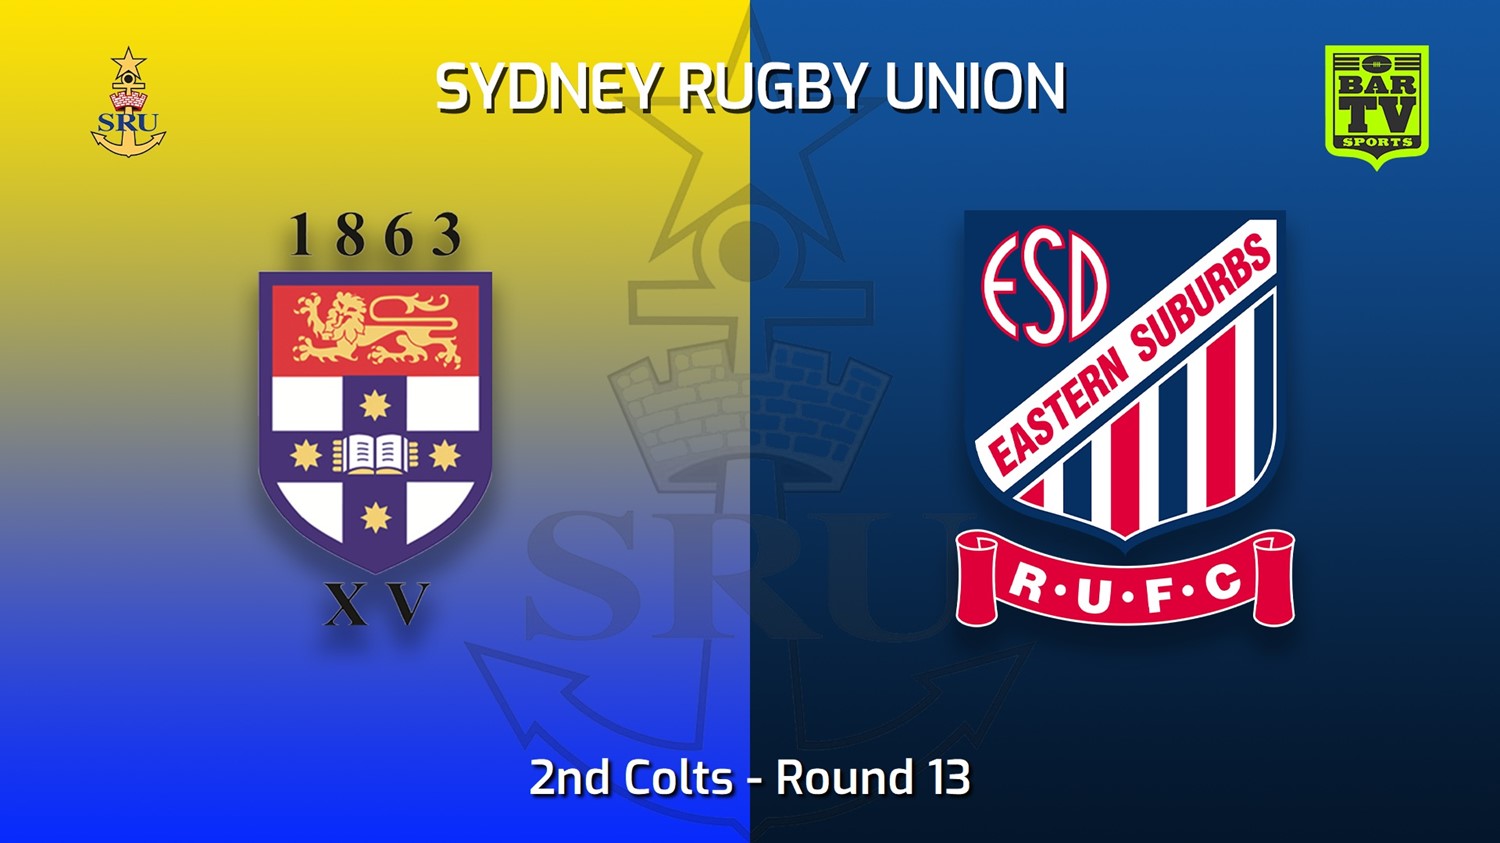 220702-Sydney Rugby Union Round 13 - 2nd Colts - Sydney University v Eastern Suburbs Sydney Slate Image